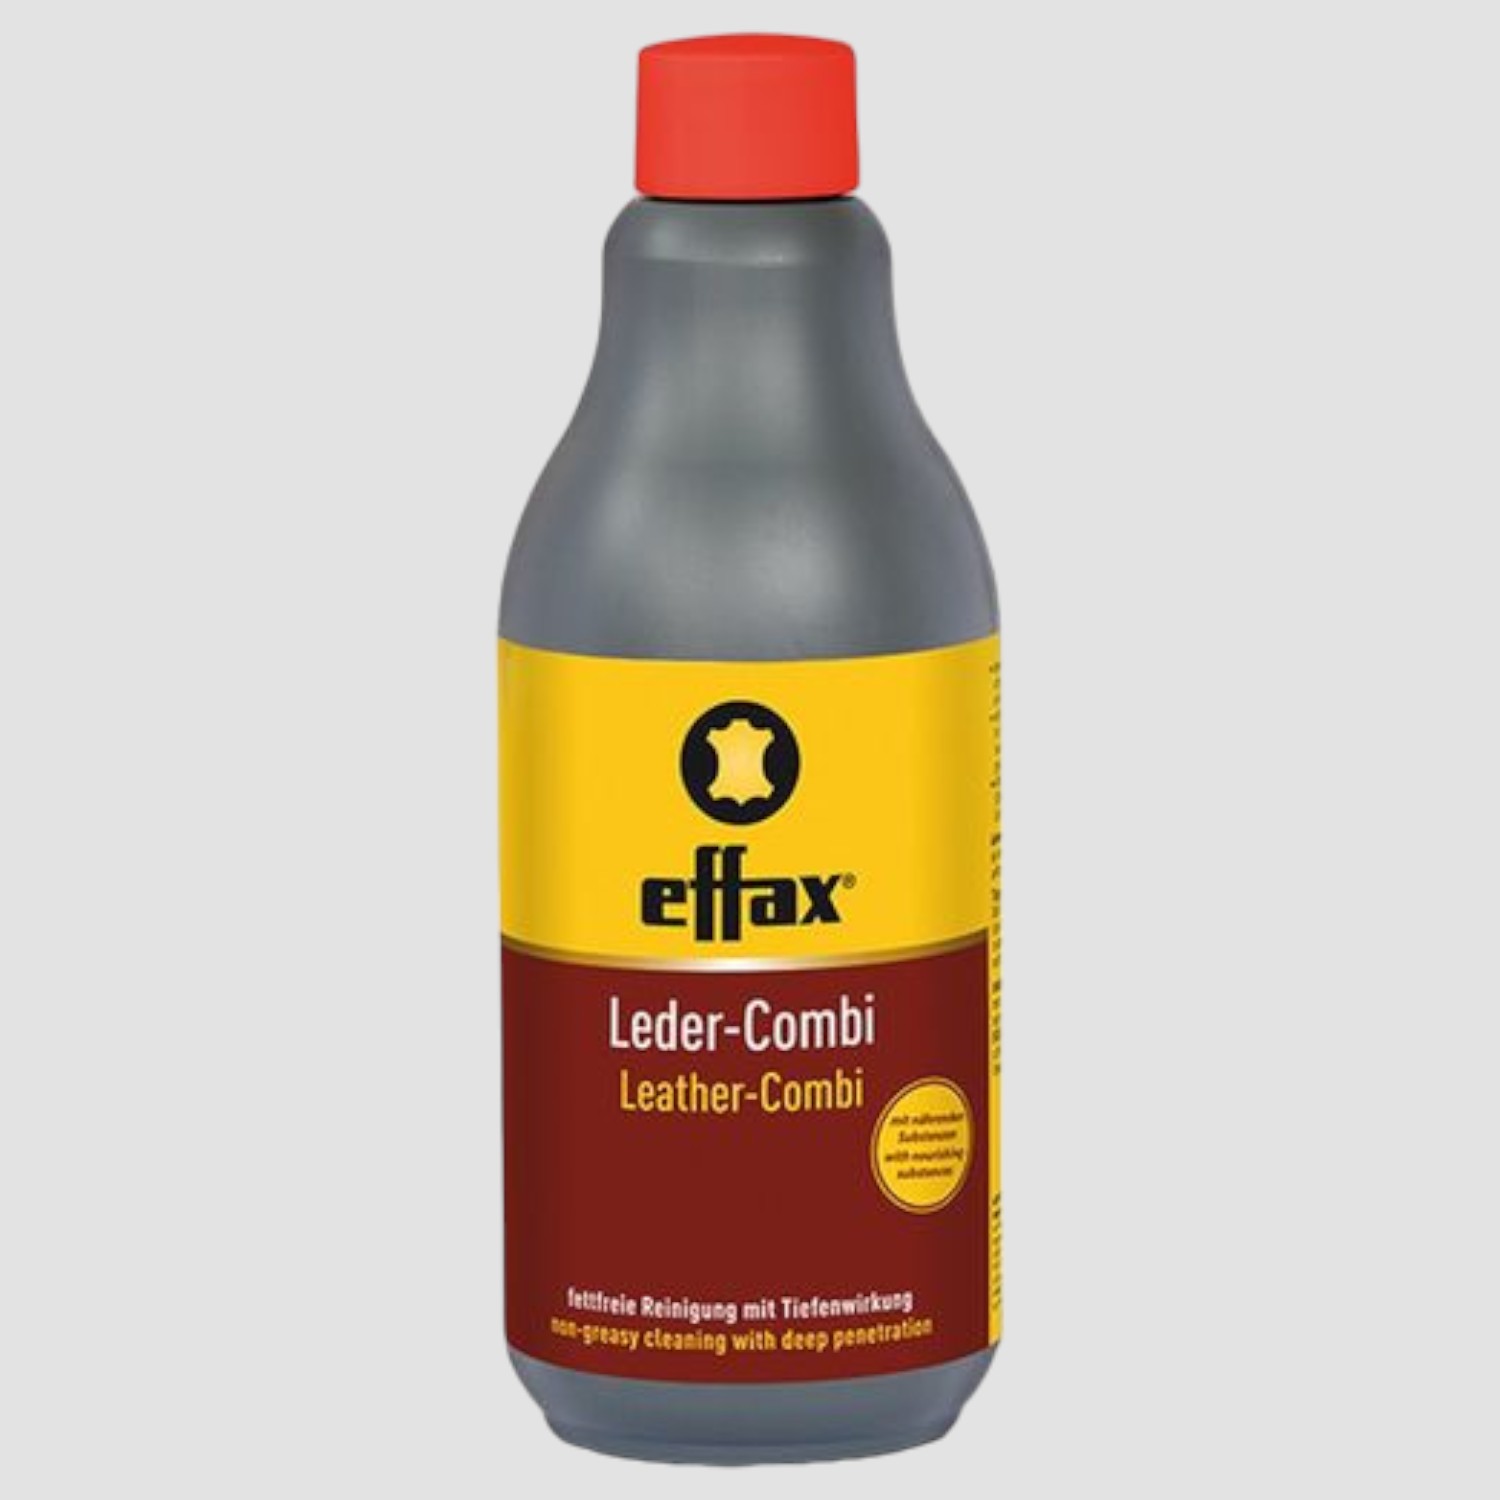 EFFAX Lederpflege LEDER-COMBI für alle Glattleder